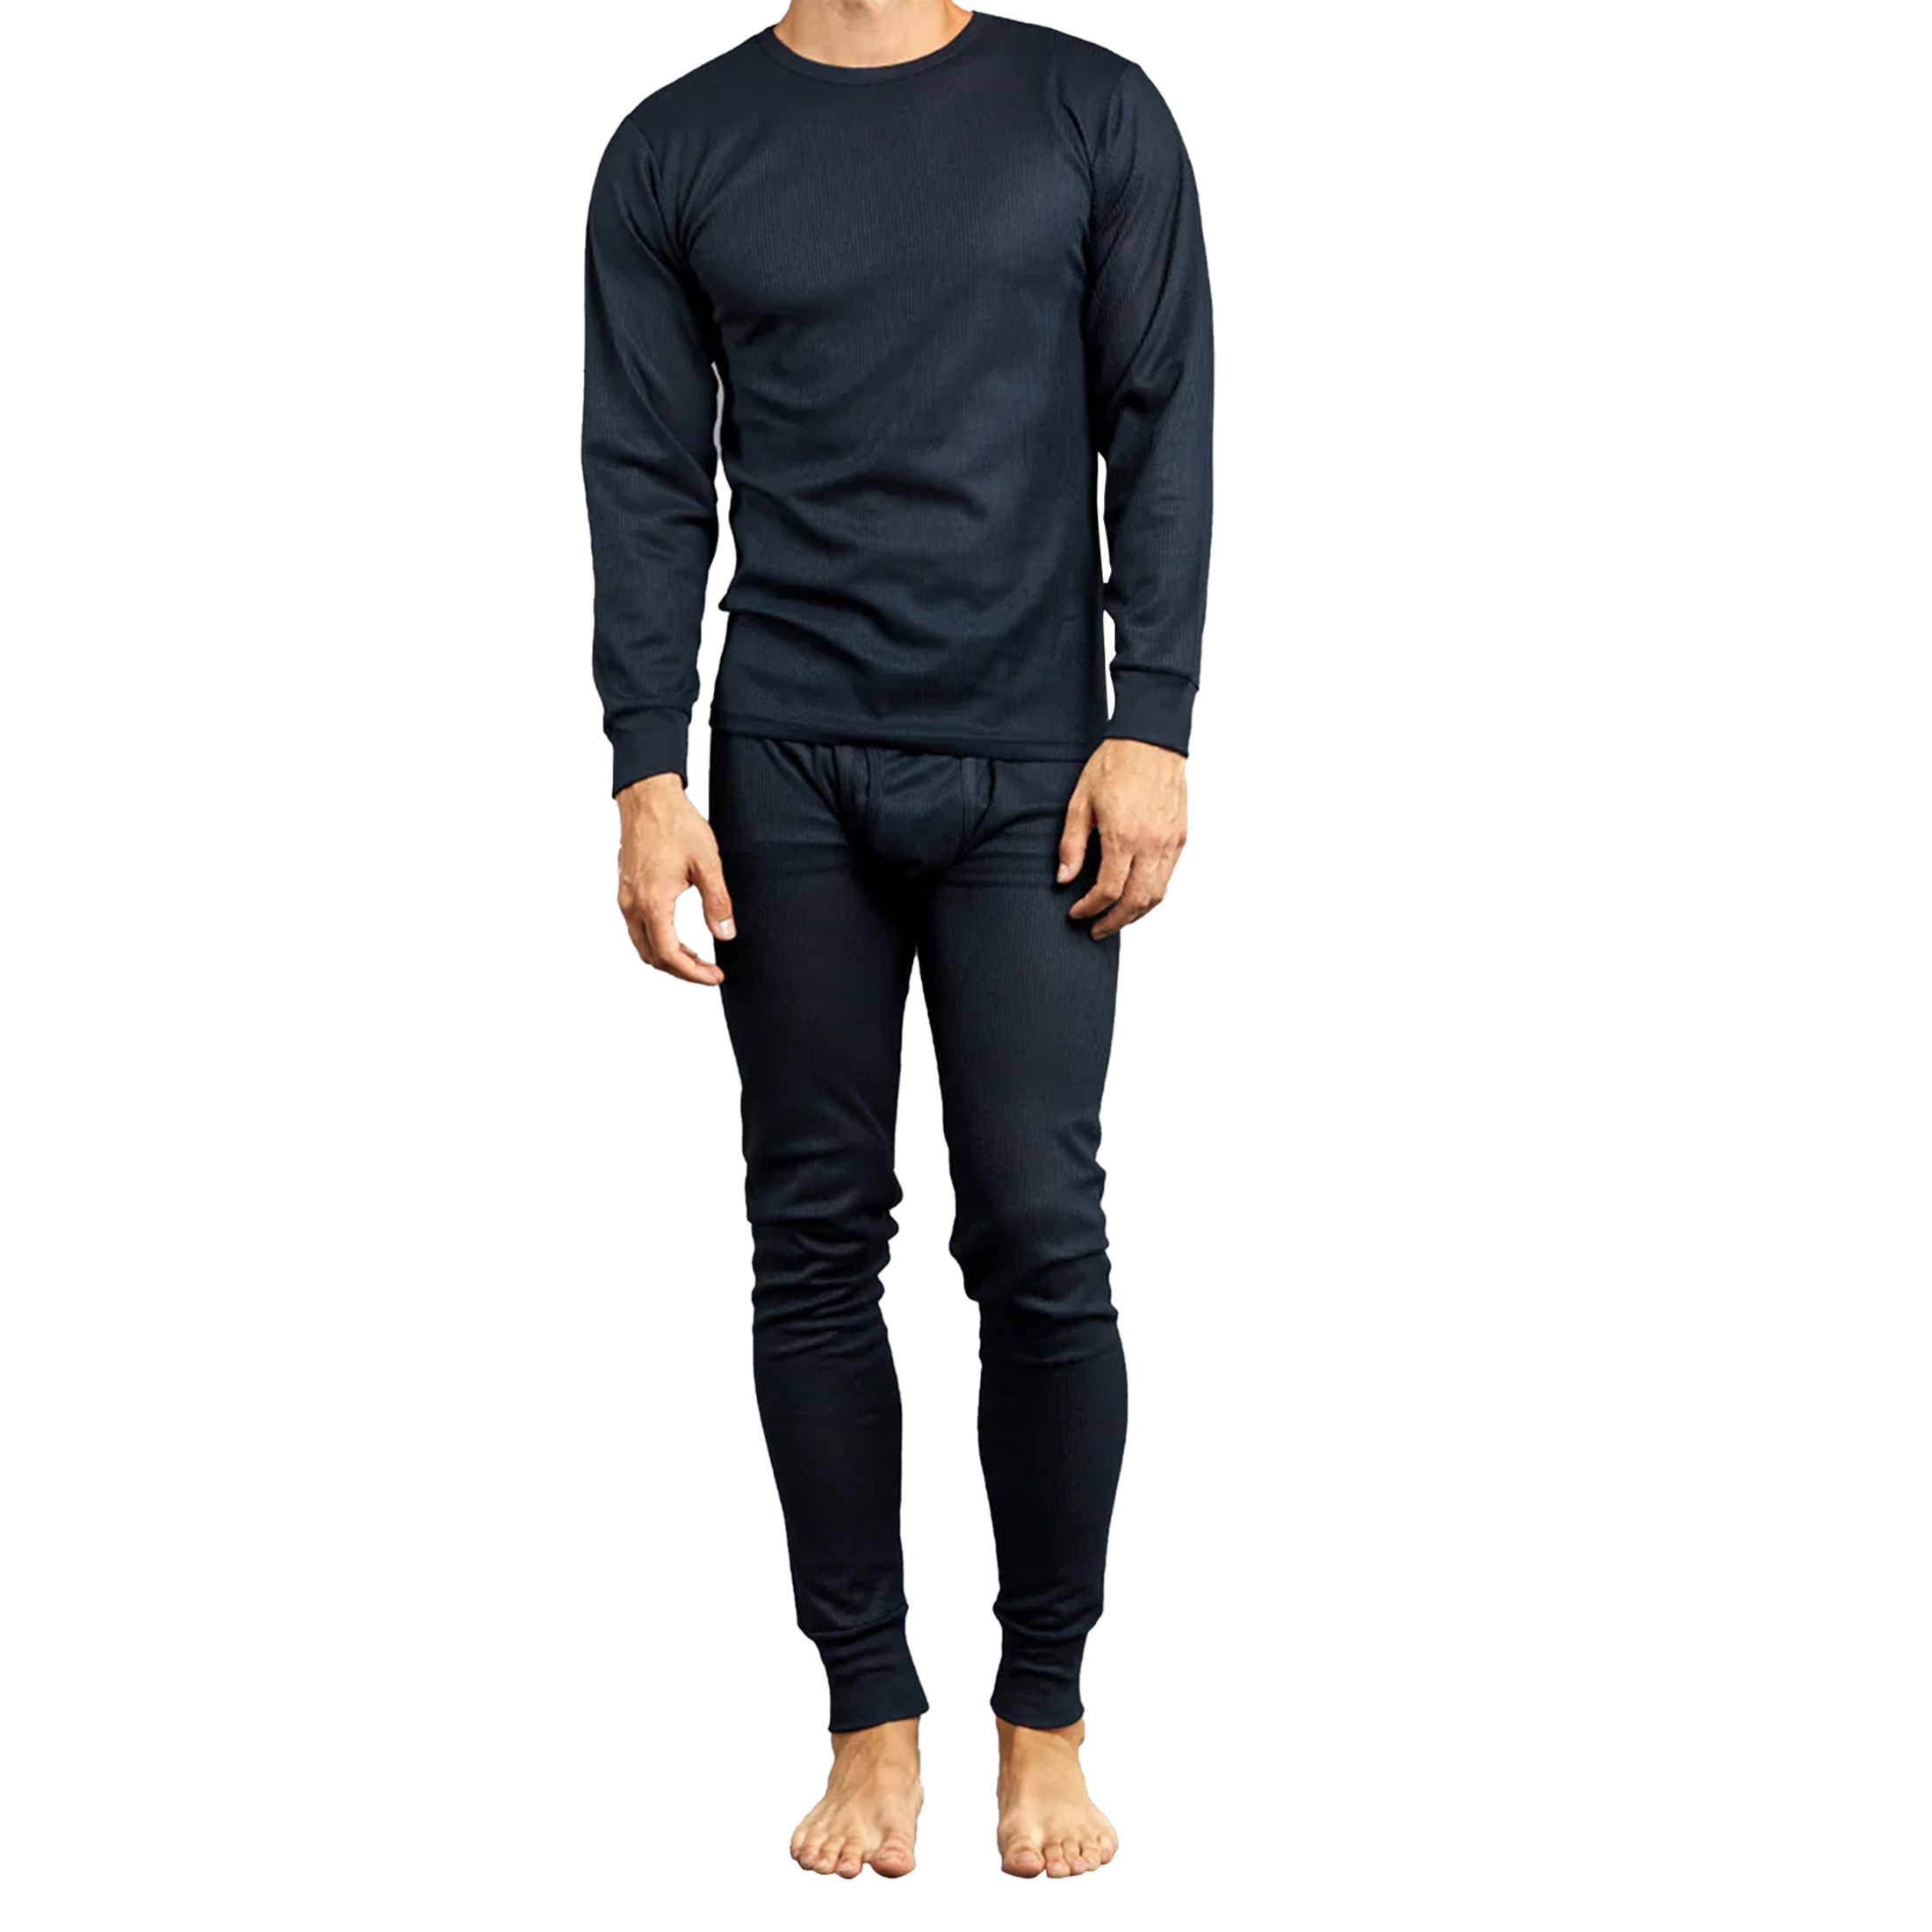 2-Piece: Men's Moisture Wicking Long Johns Base Layer Thermal Underwear Set (Top & Bottom) - Navy, Medium